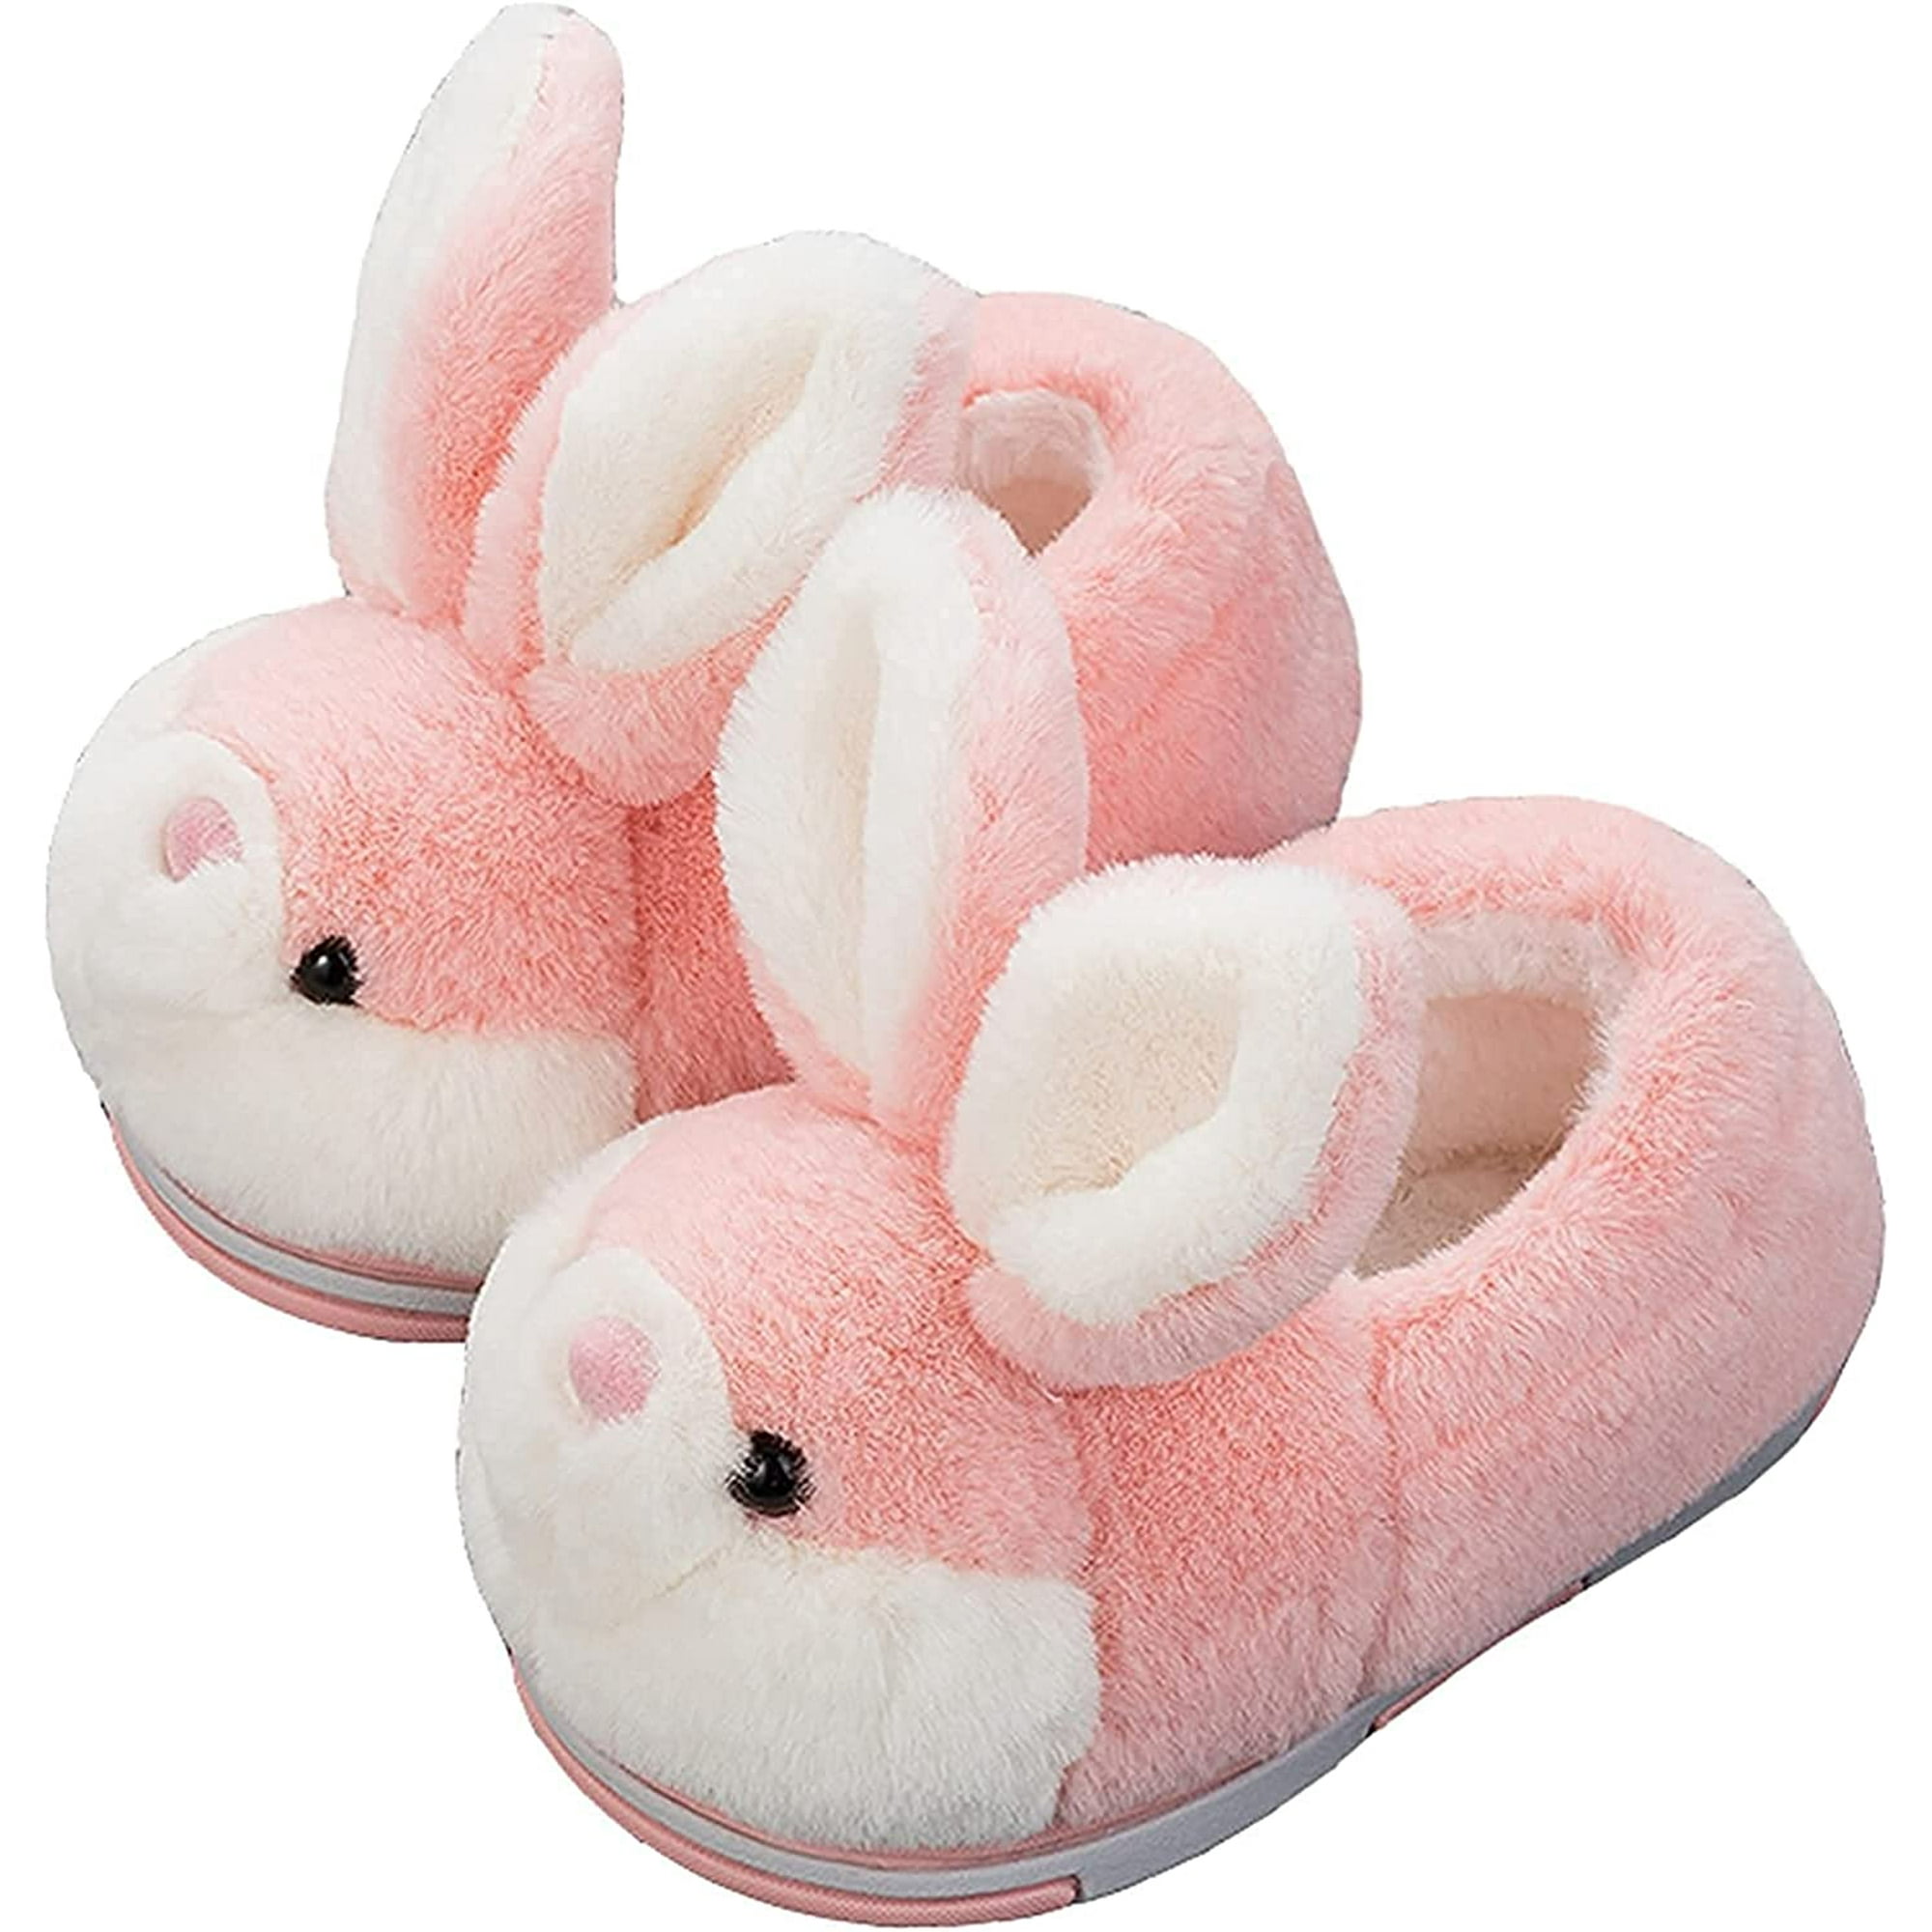 Fuzzy Bunny Slippers for Girls Warm Winter Slippers Home Plush Animal Slippers Pink Slippers - Walmart.com